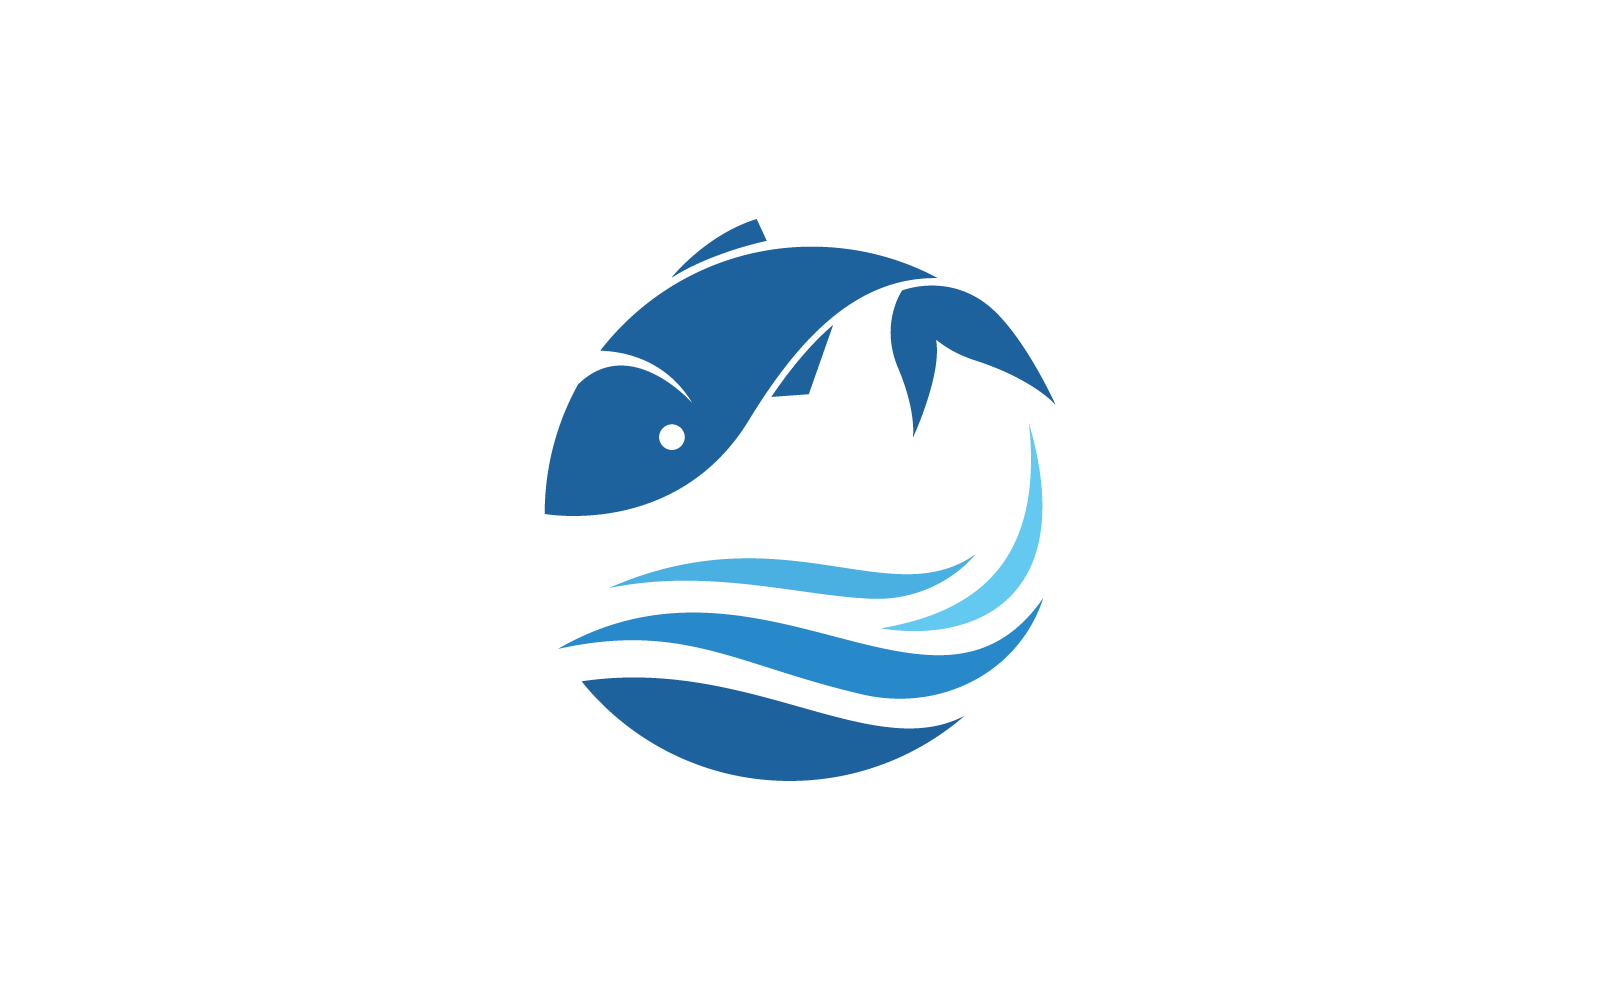 Fish illustration design logo icon template